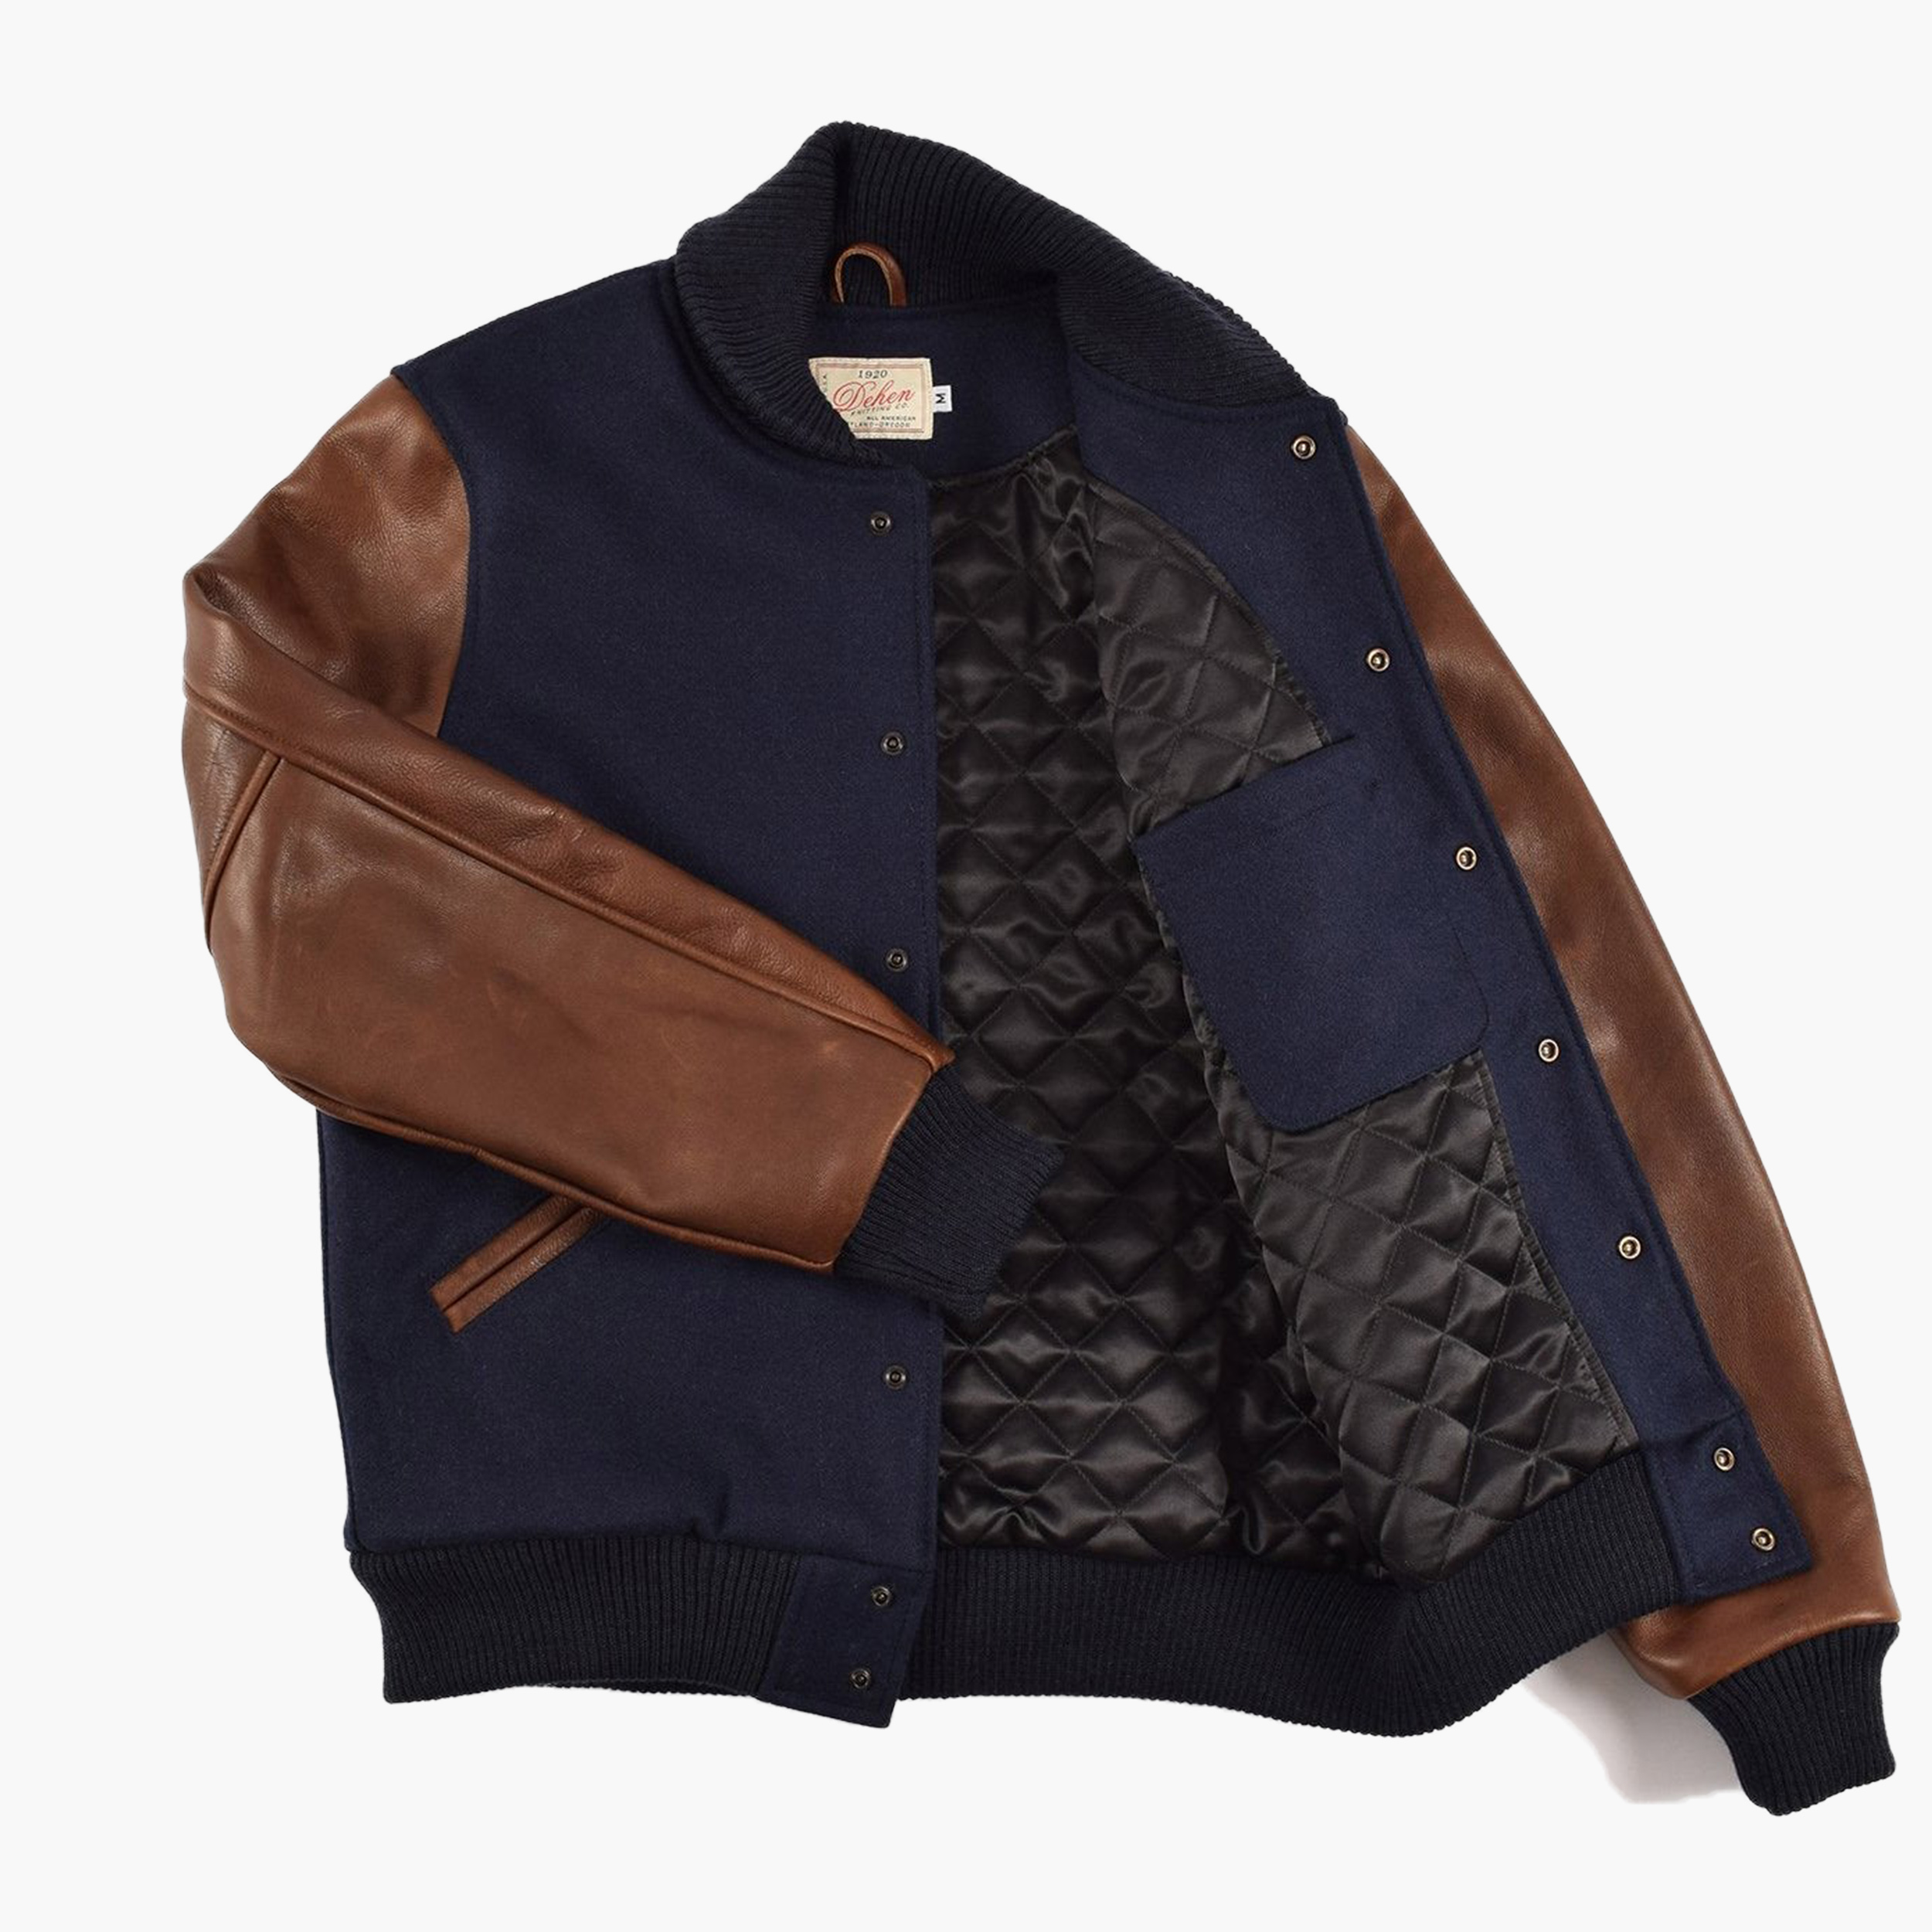 DEHEN Leather & Wool Varsity Jacket - Black